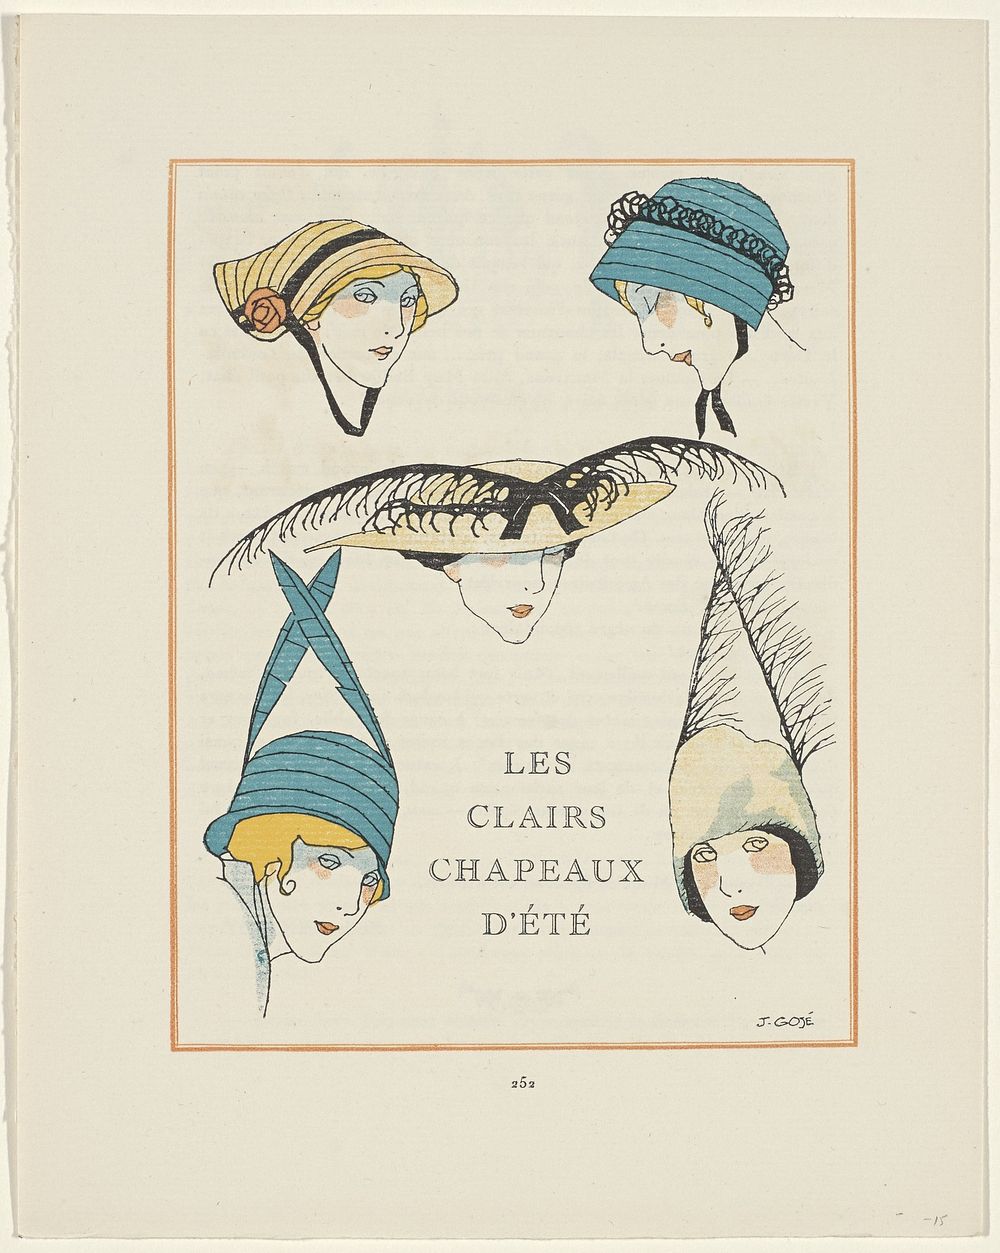 Accessories (1914) by Francisco Javier Gosé, anonymous, Lucien Vogel, Paul Cassirer, Heinemann and G Kadar